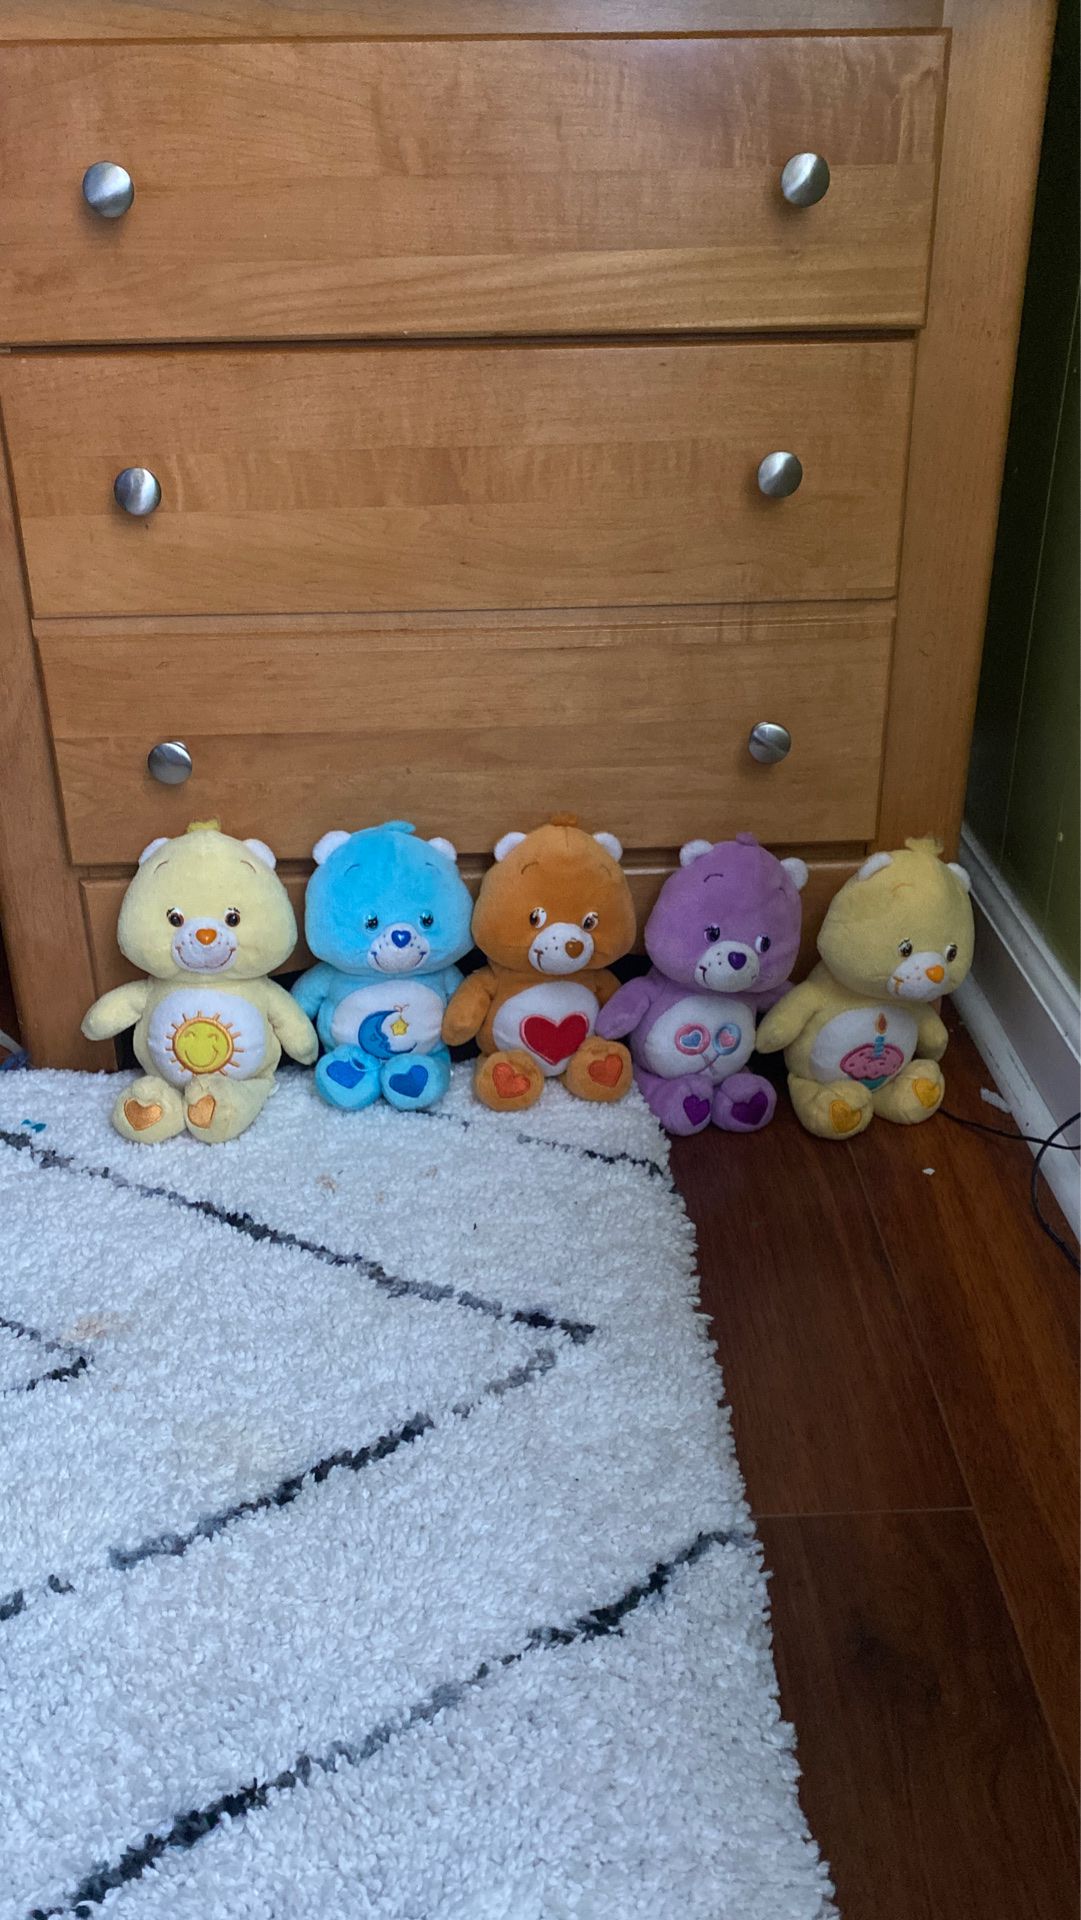 Five stuffed animal teddy bears